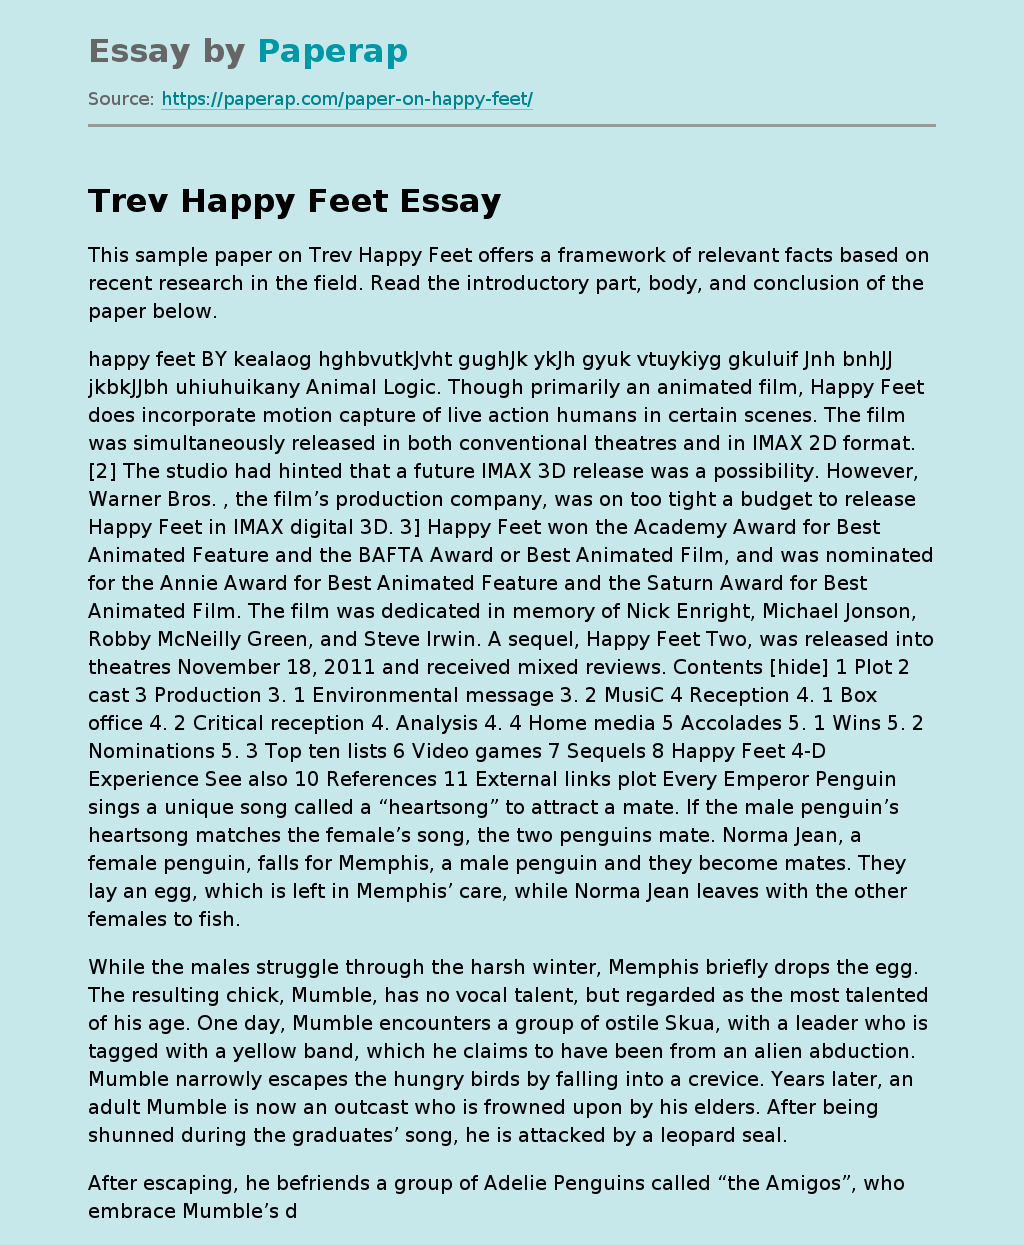 Trev Happy Feet